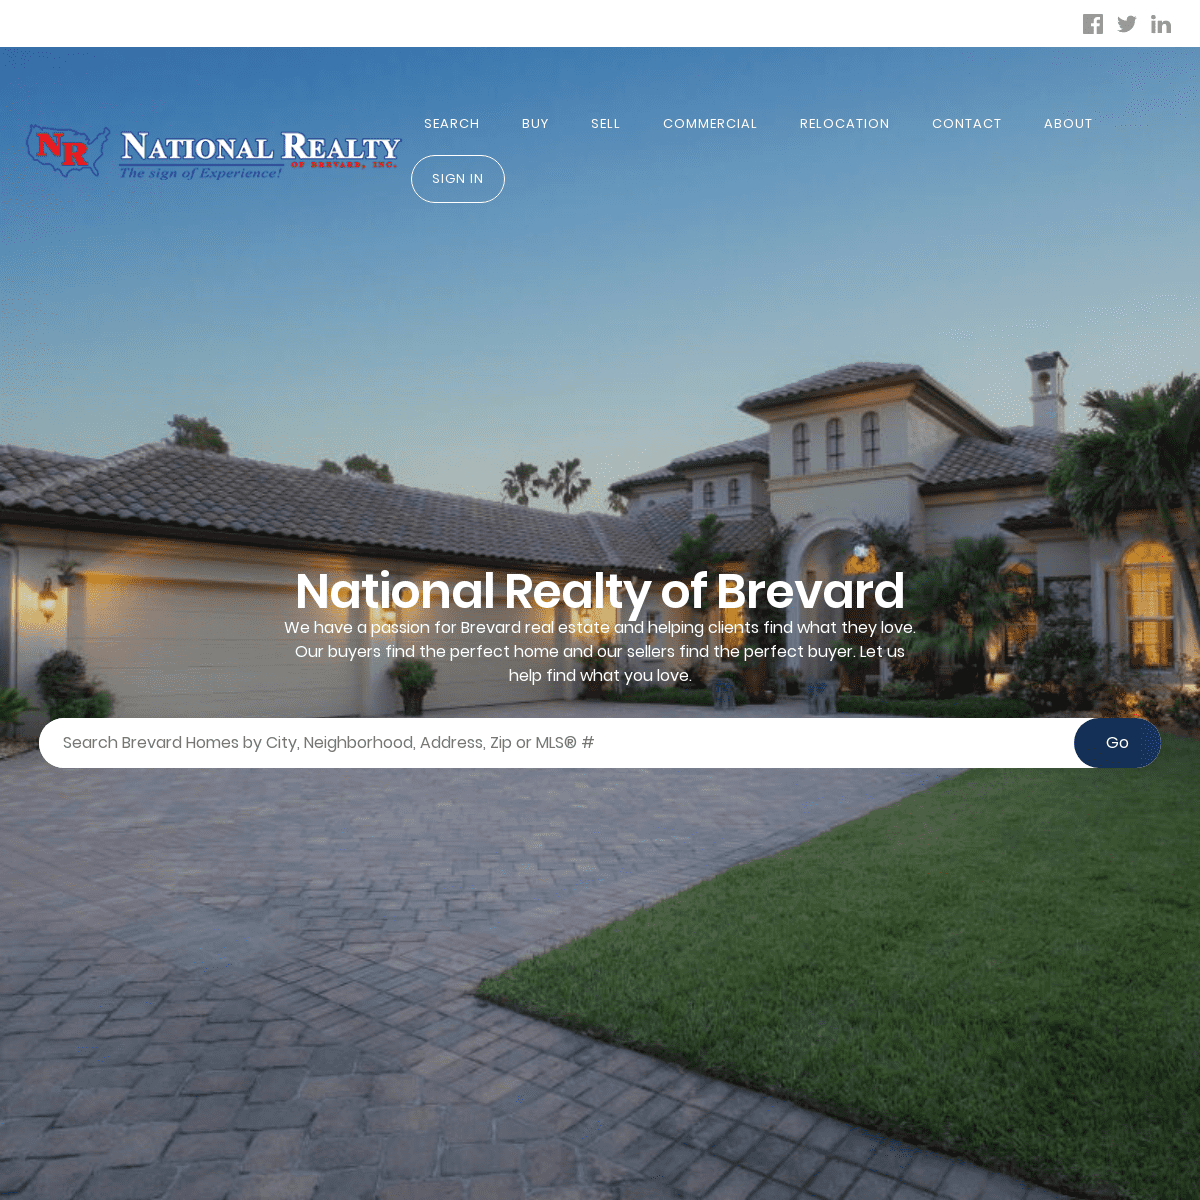 Brevard Homes For Sale | Brevard MLS Home Search | Brevard Real Estate